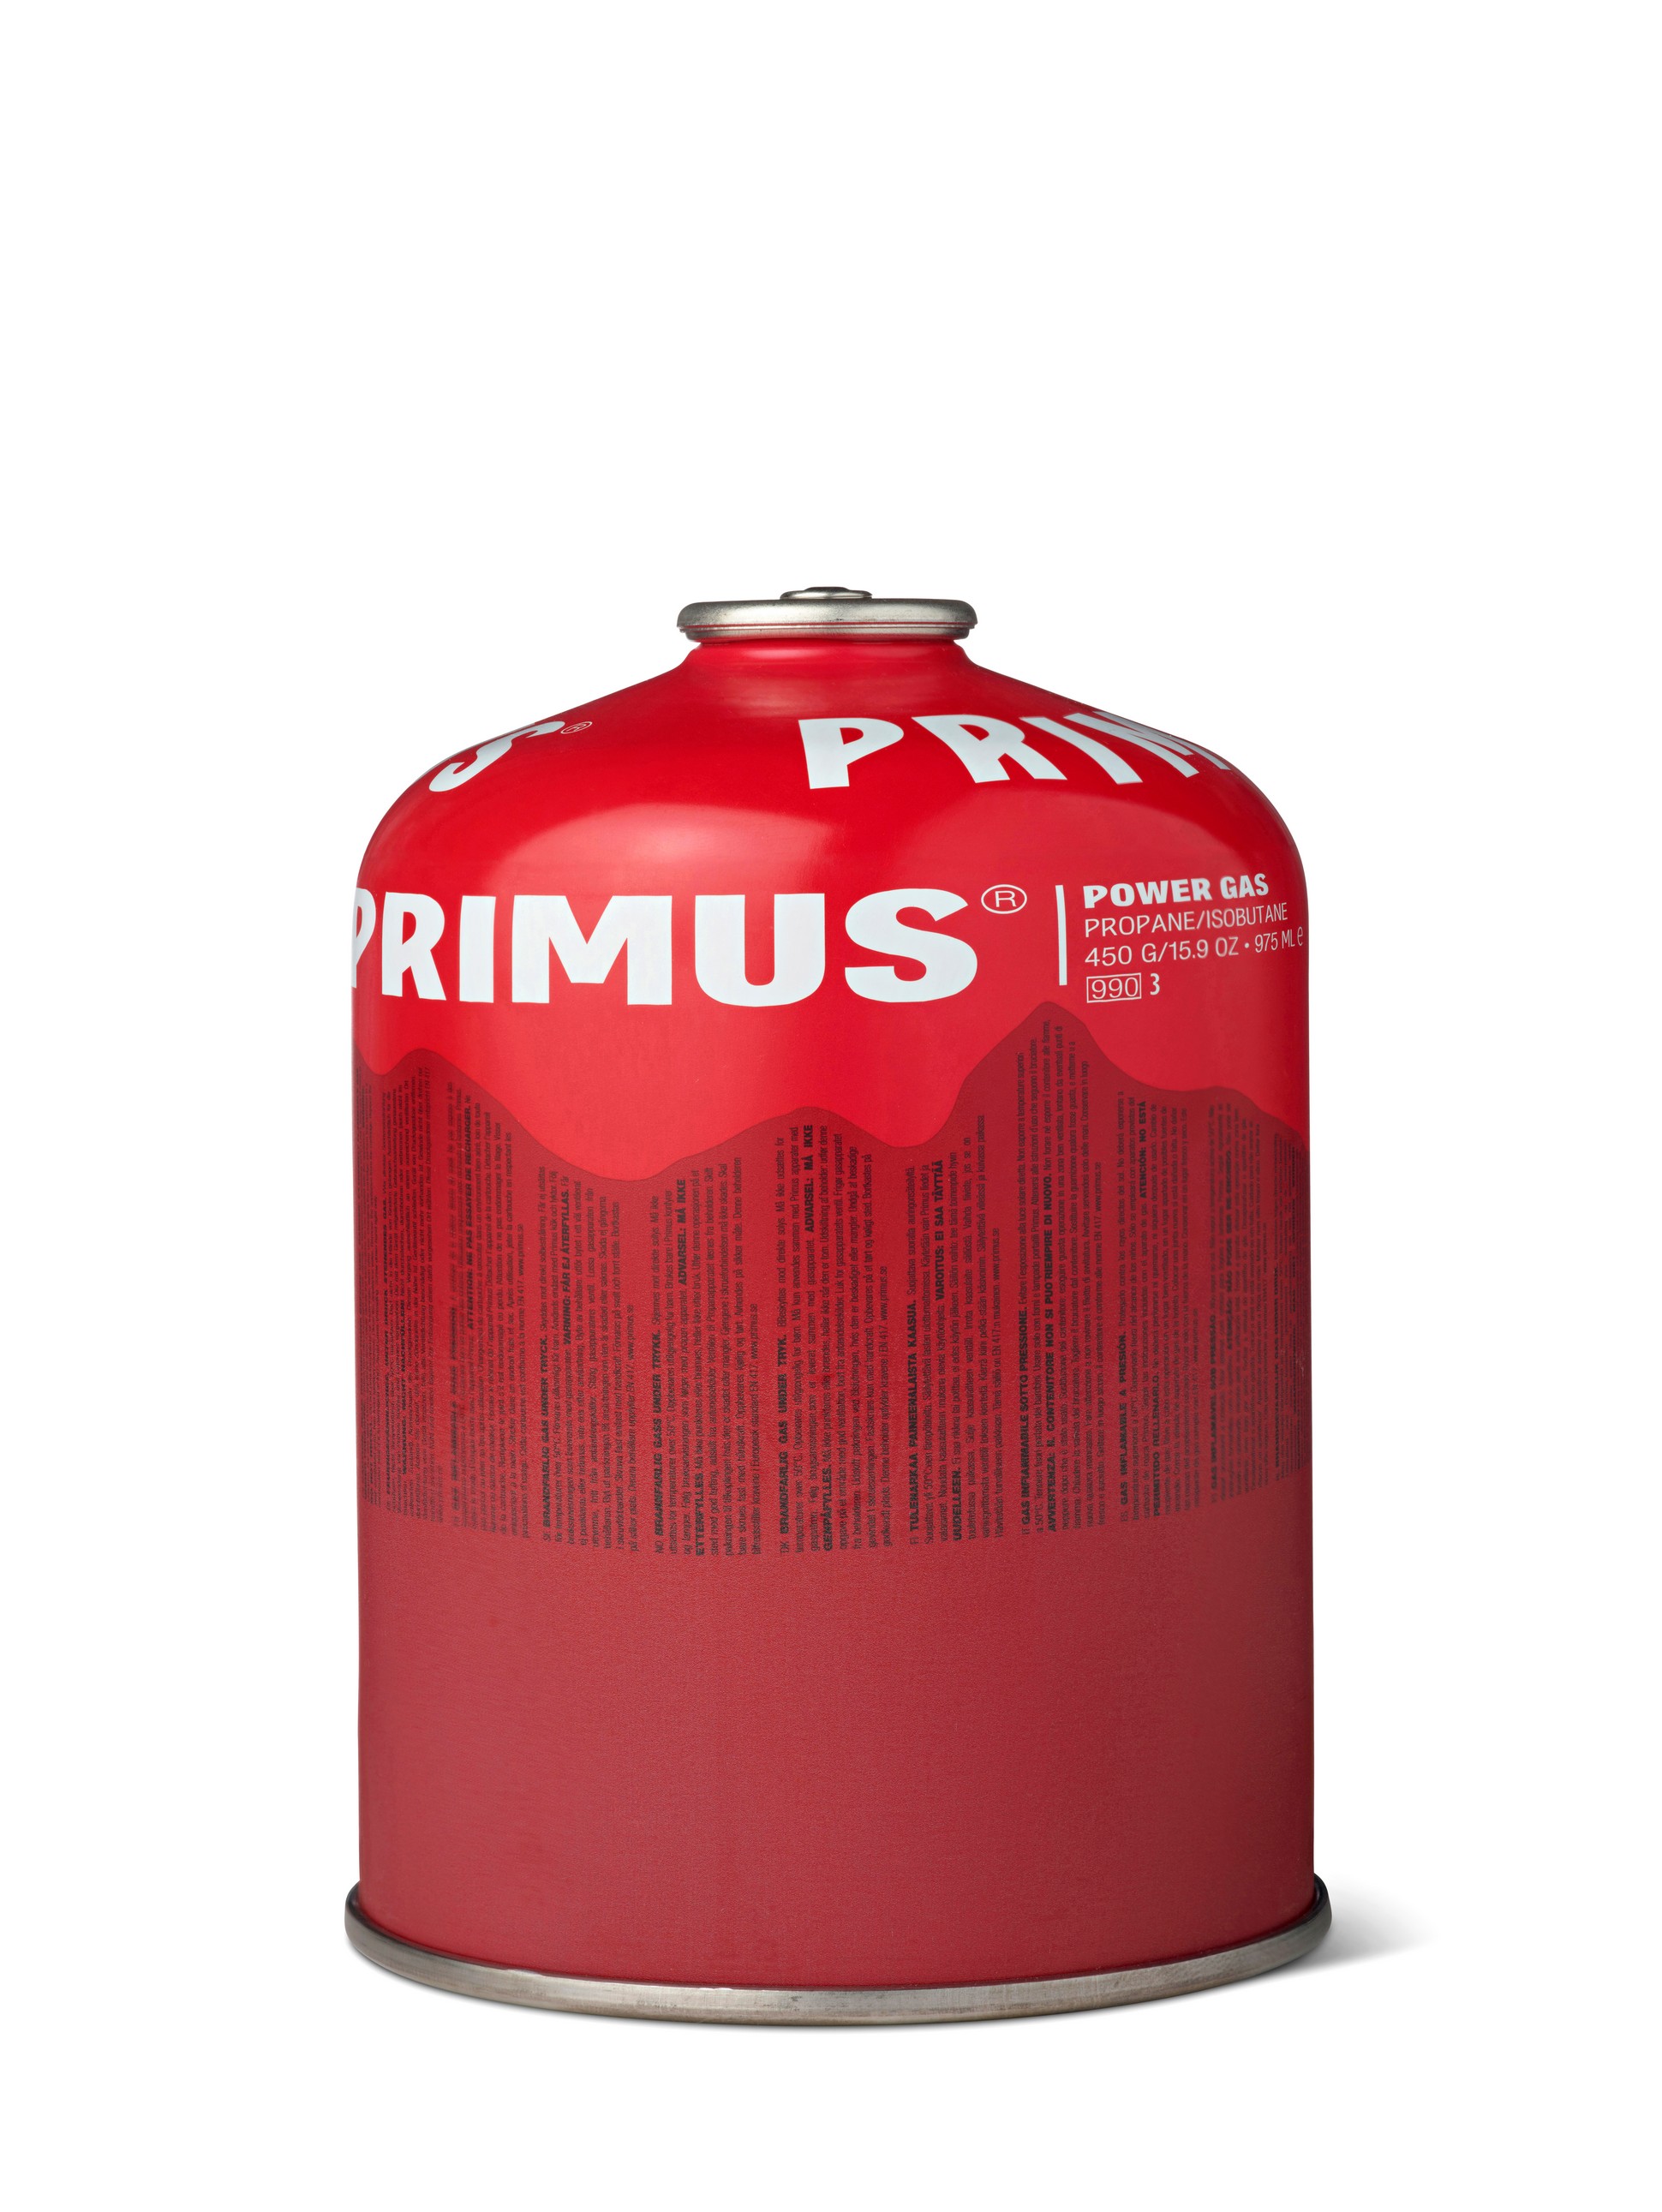 Primus "Power Gas" - 450g